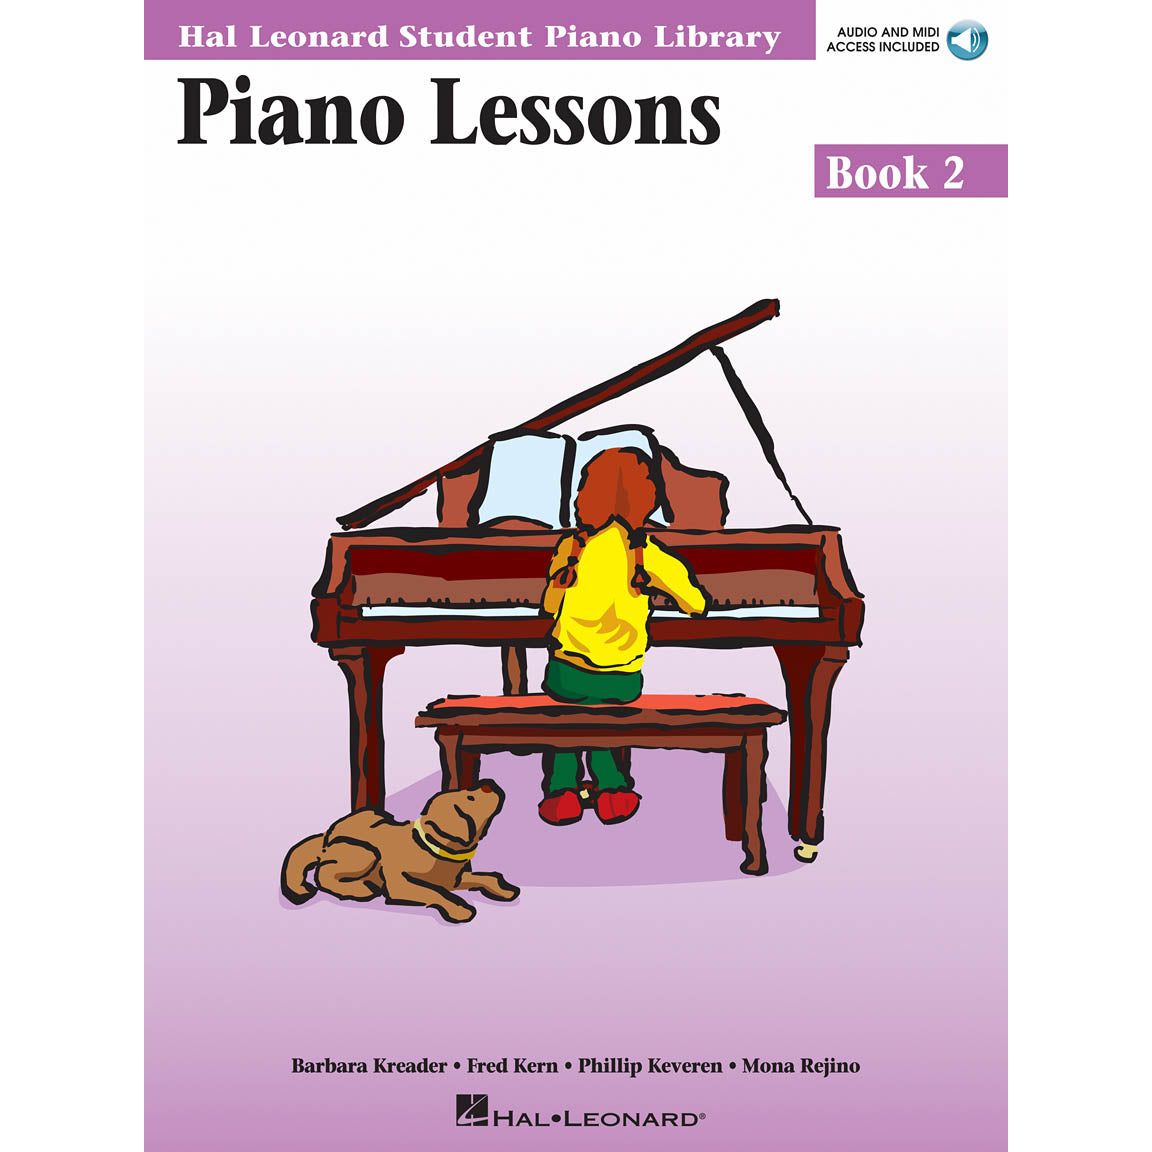 Hal Leonard Student Piano Library - Piano Lessons Book 2